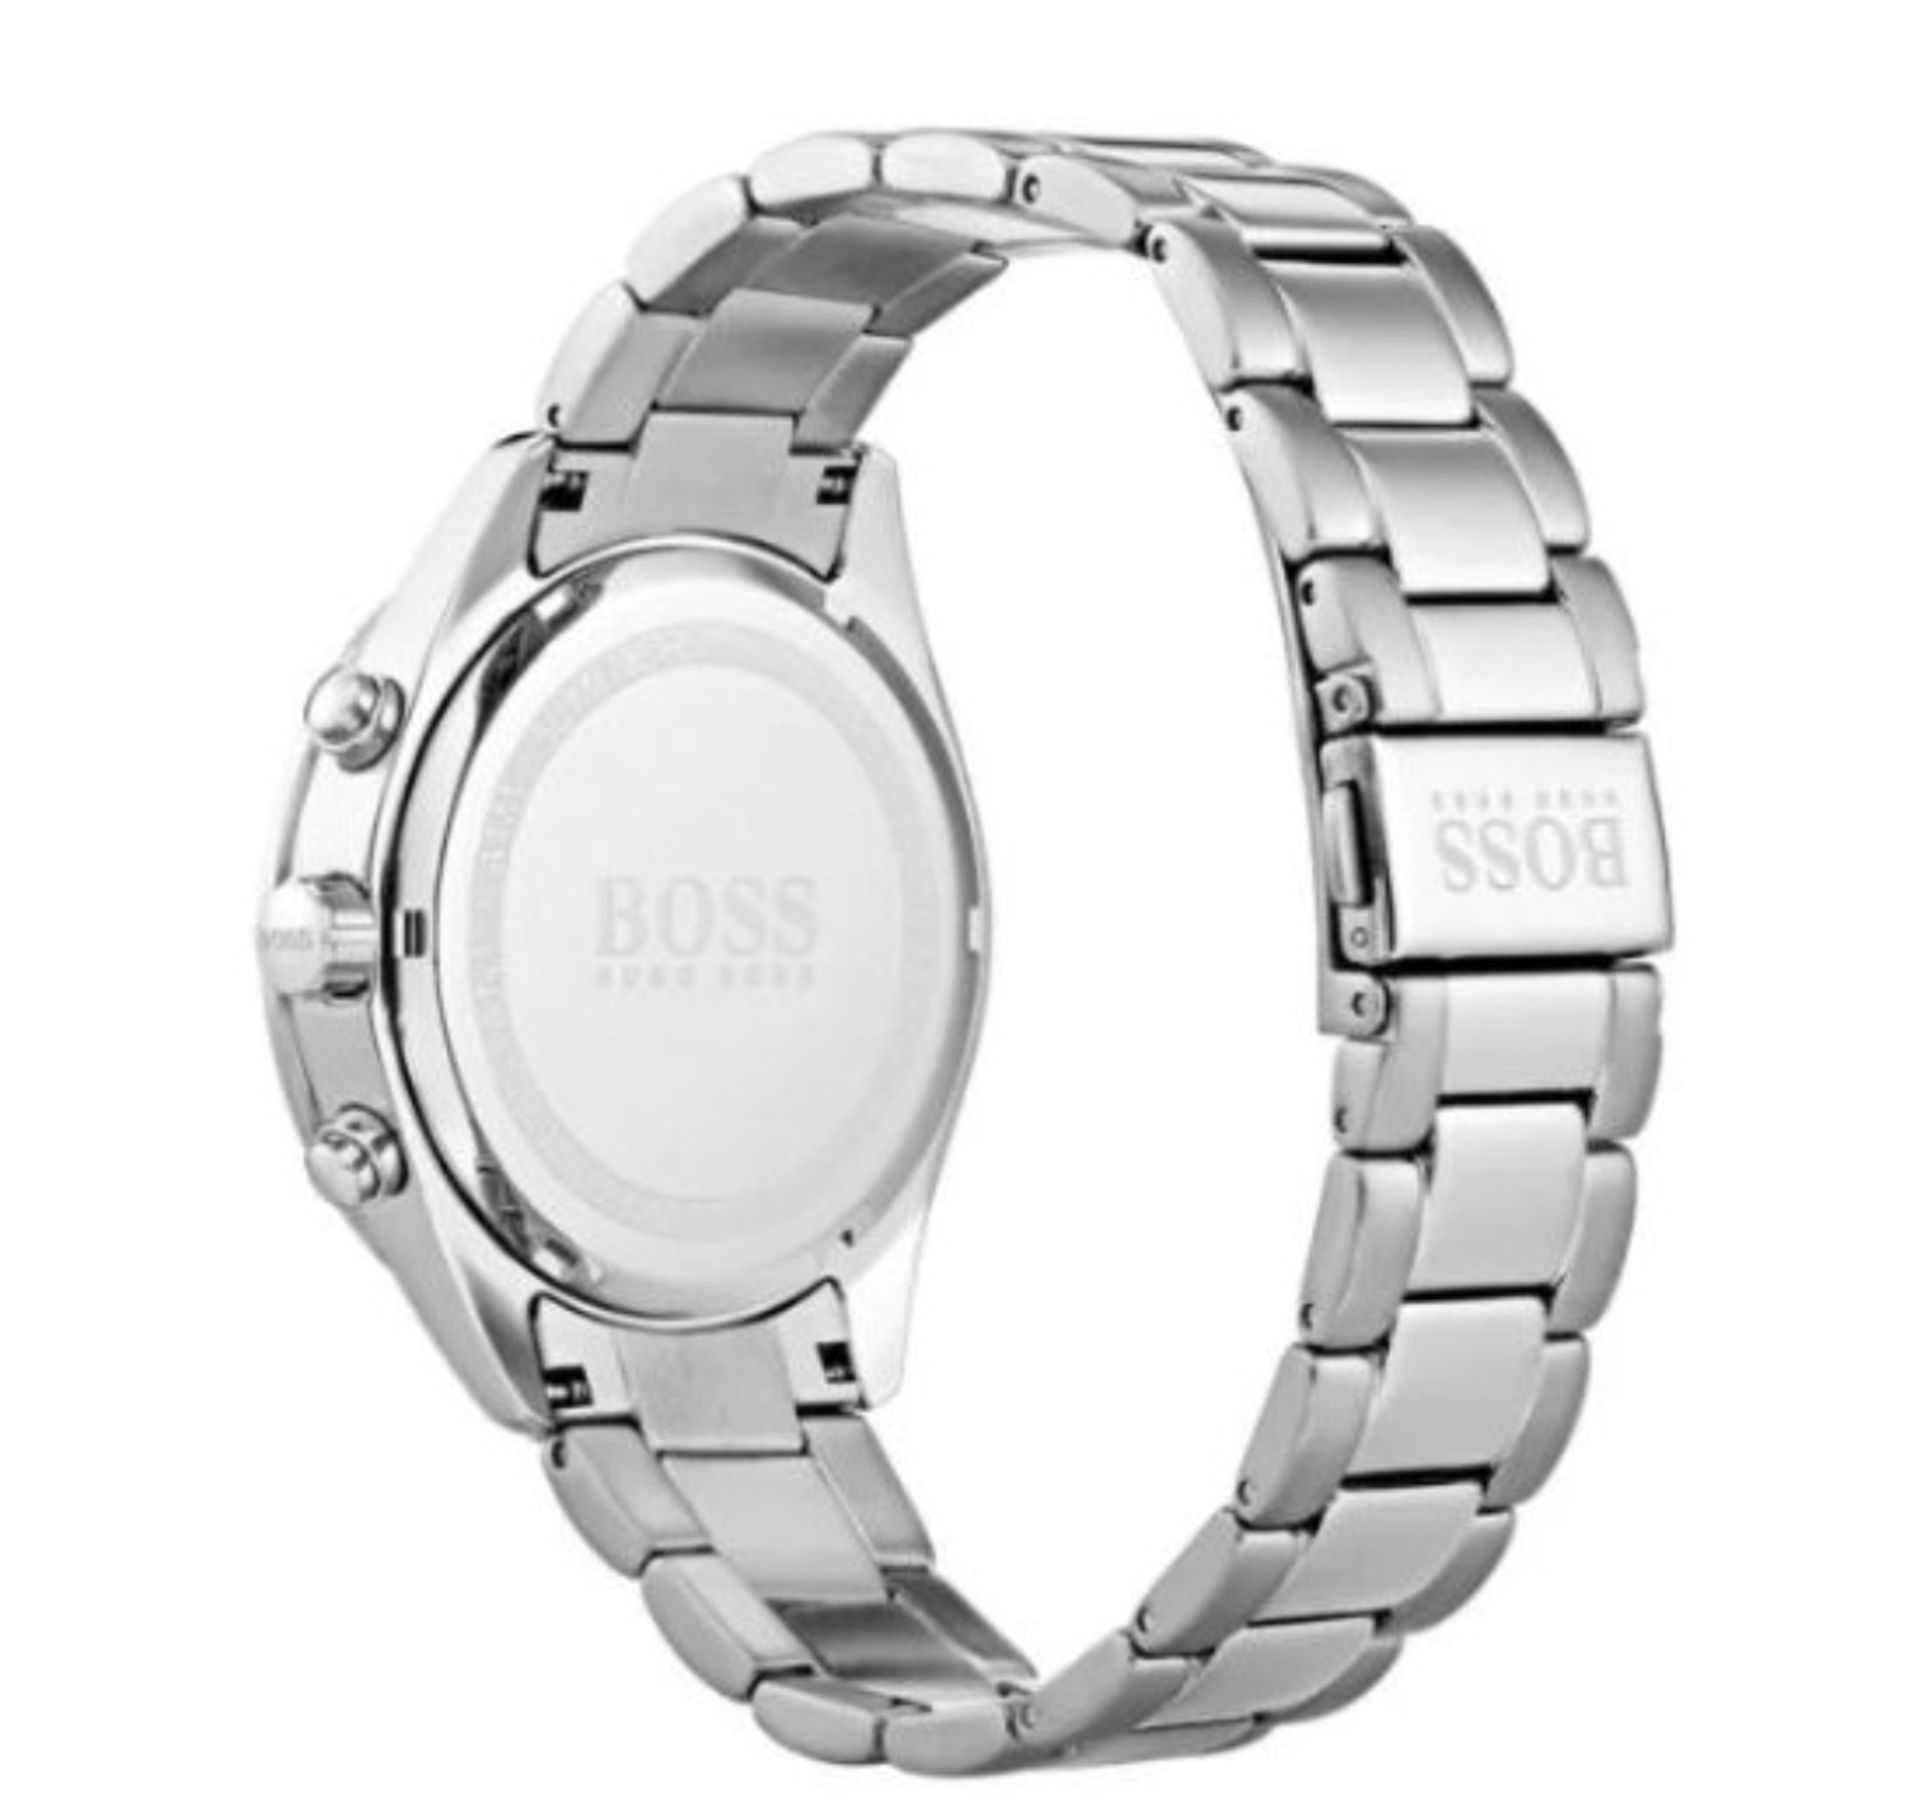 Hugo Boss 1513582 Men's Hero Lux Sport Silver Bracelet Chronograph Watch - Image 5 of 5